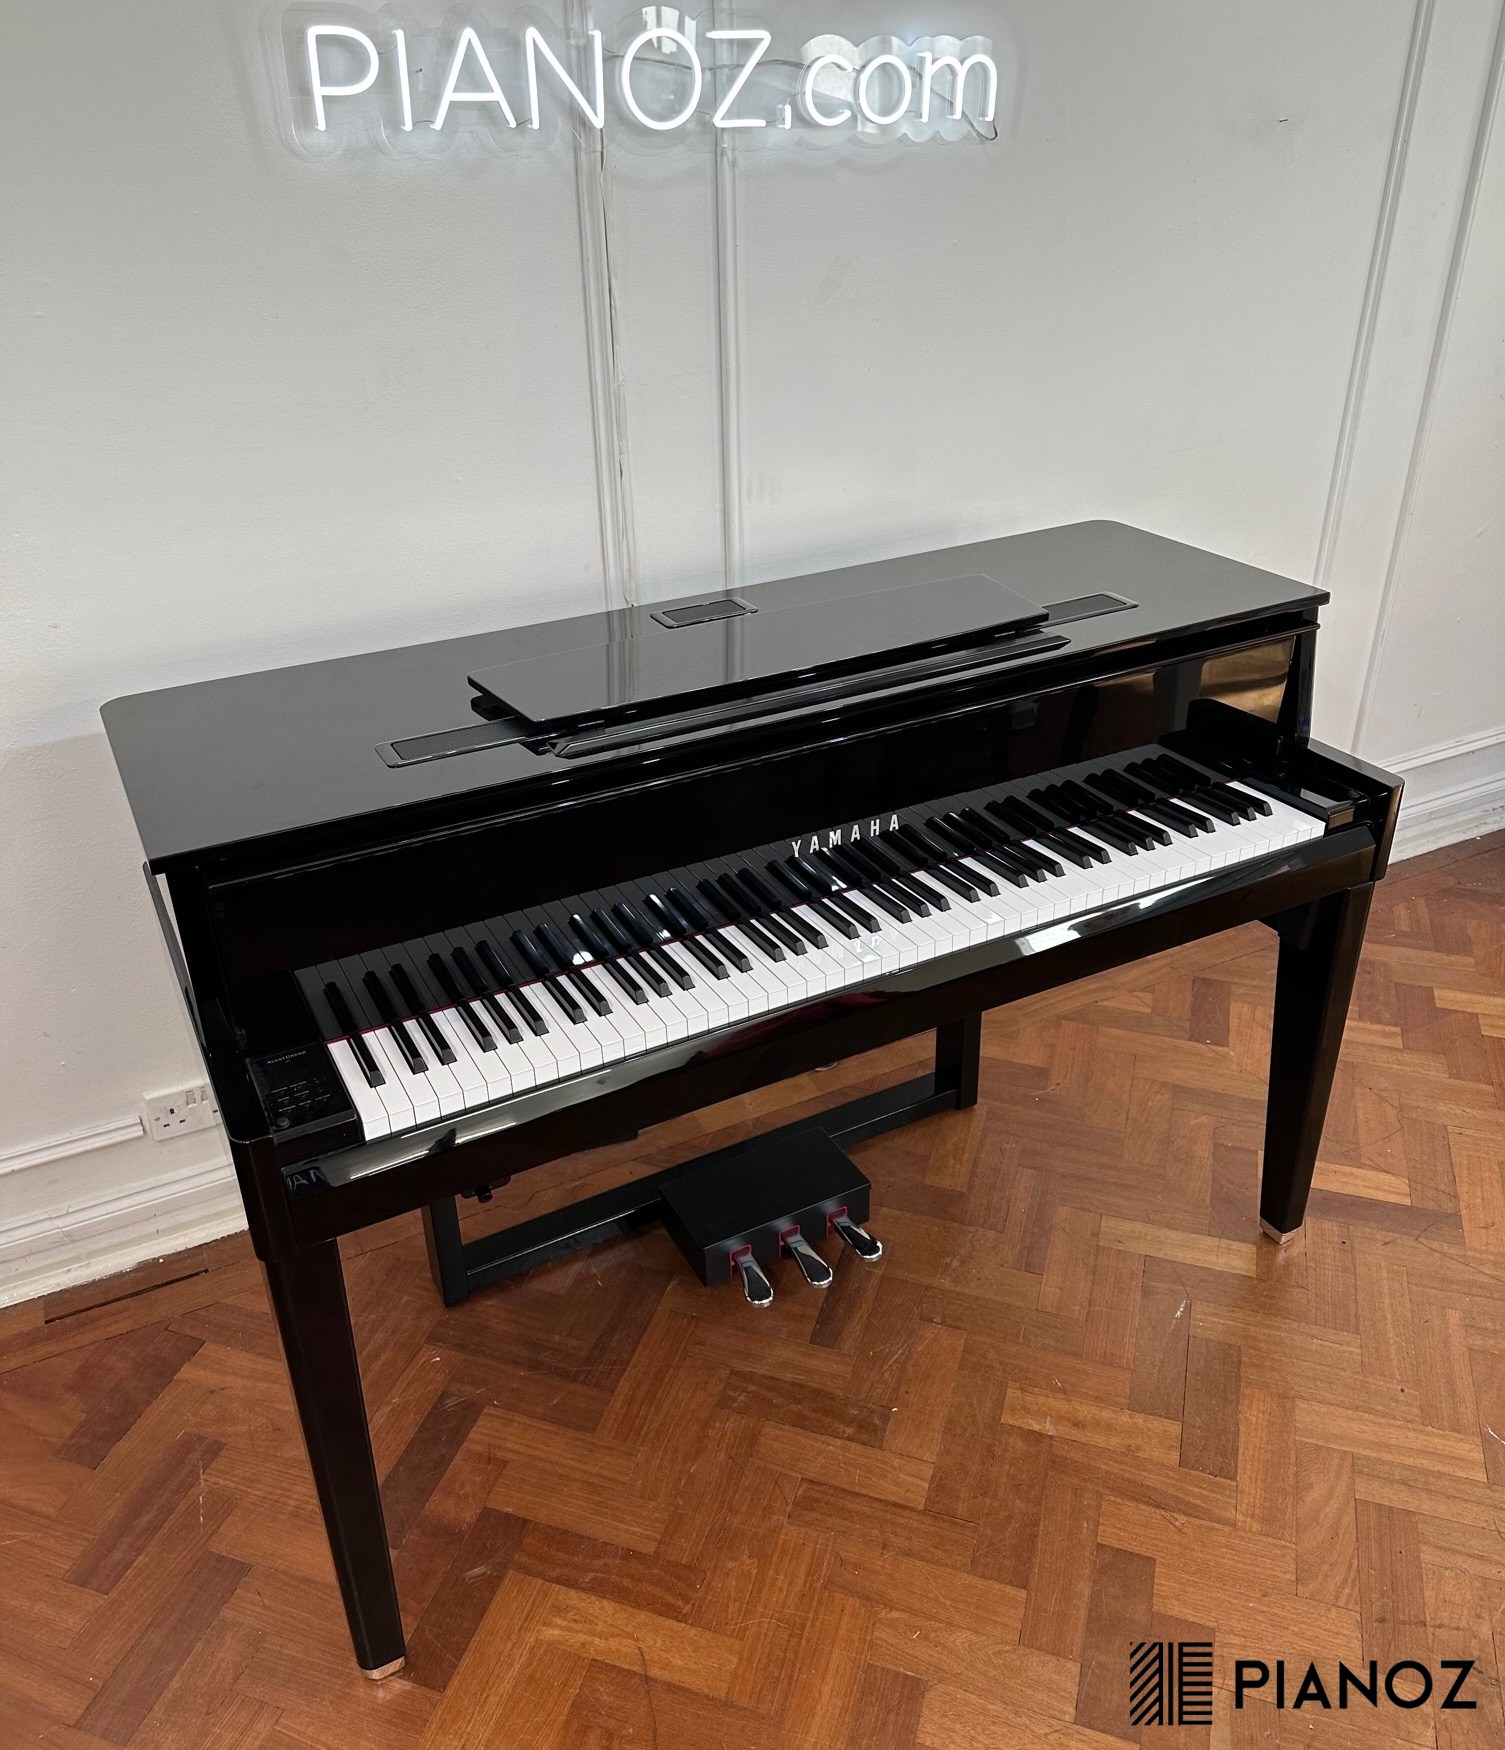 Yamaha N1 Avantgrand Digital Piano piano for sale in UK